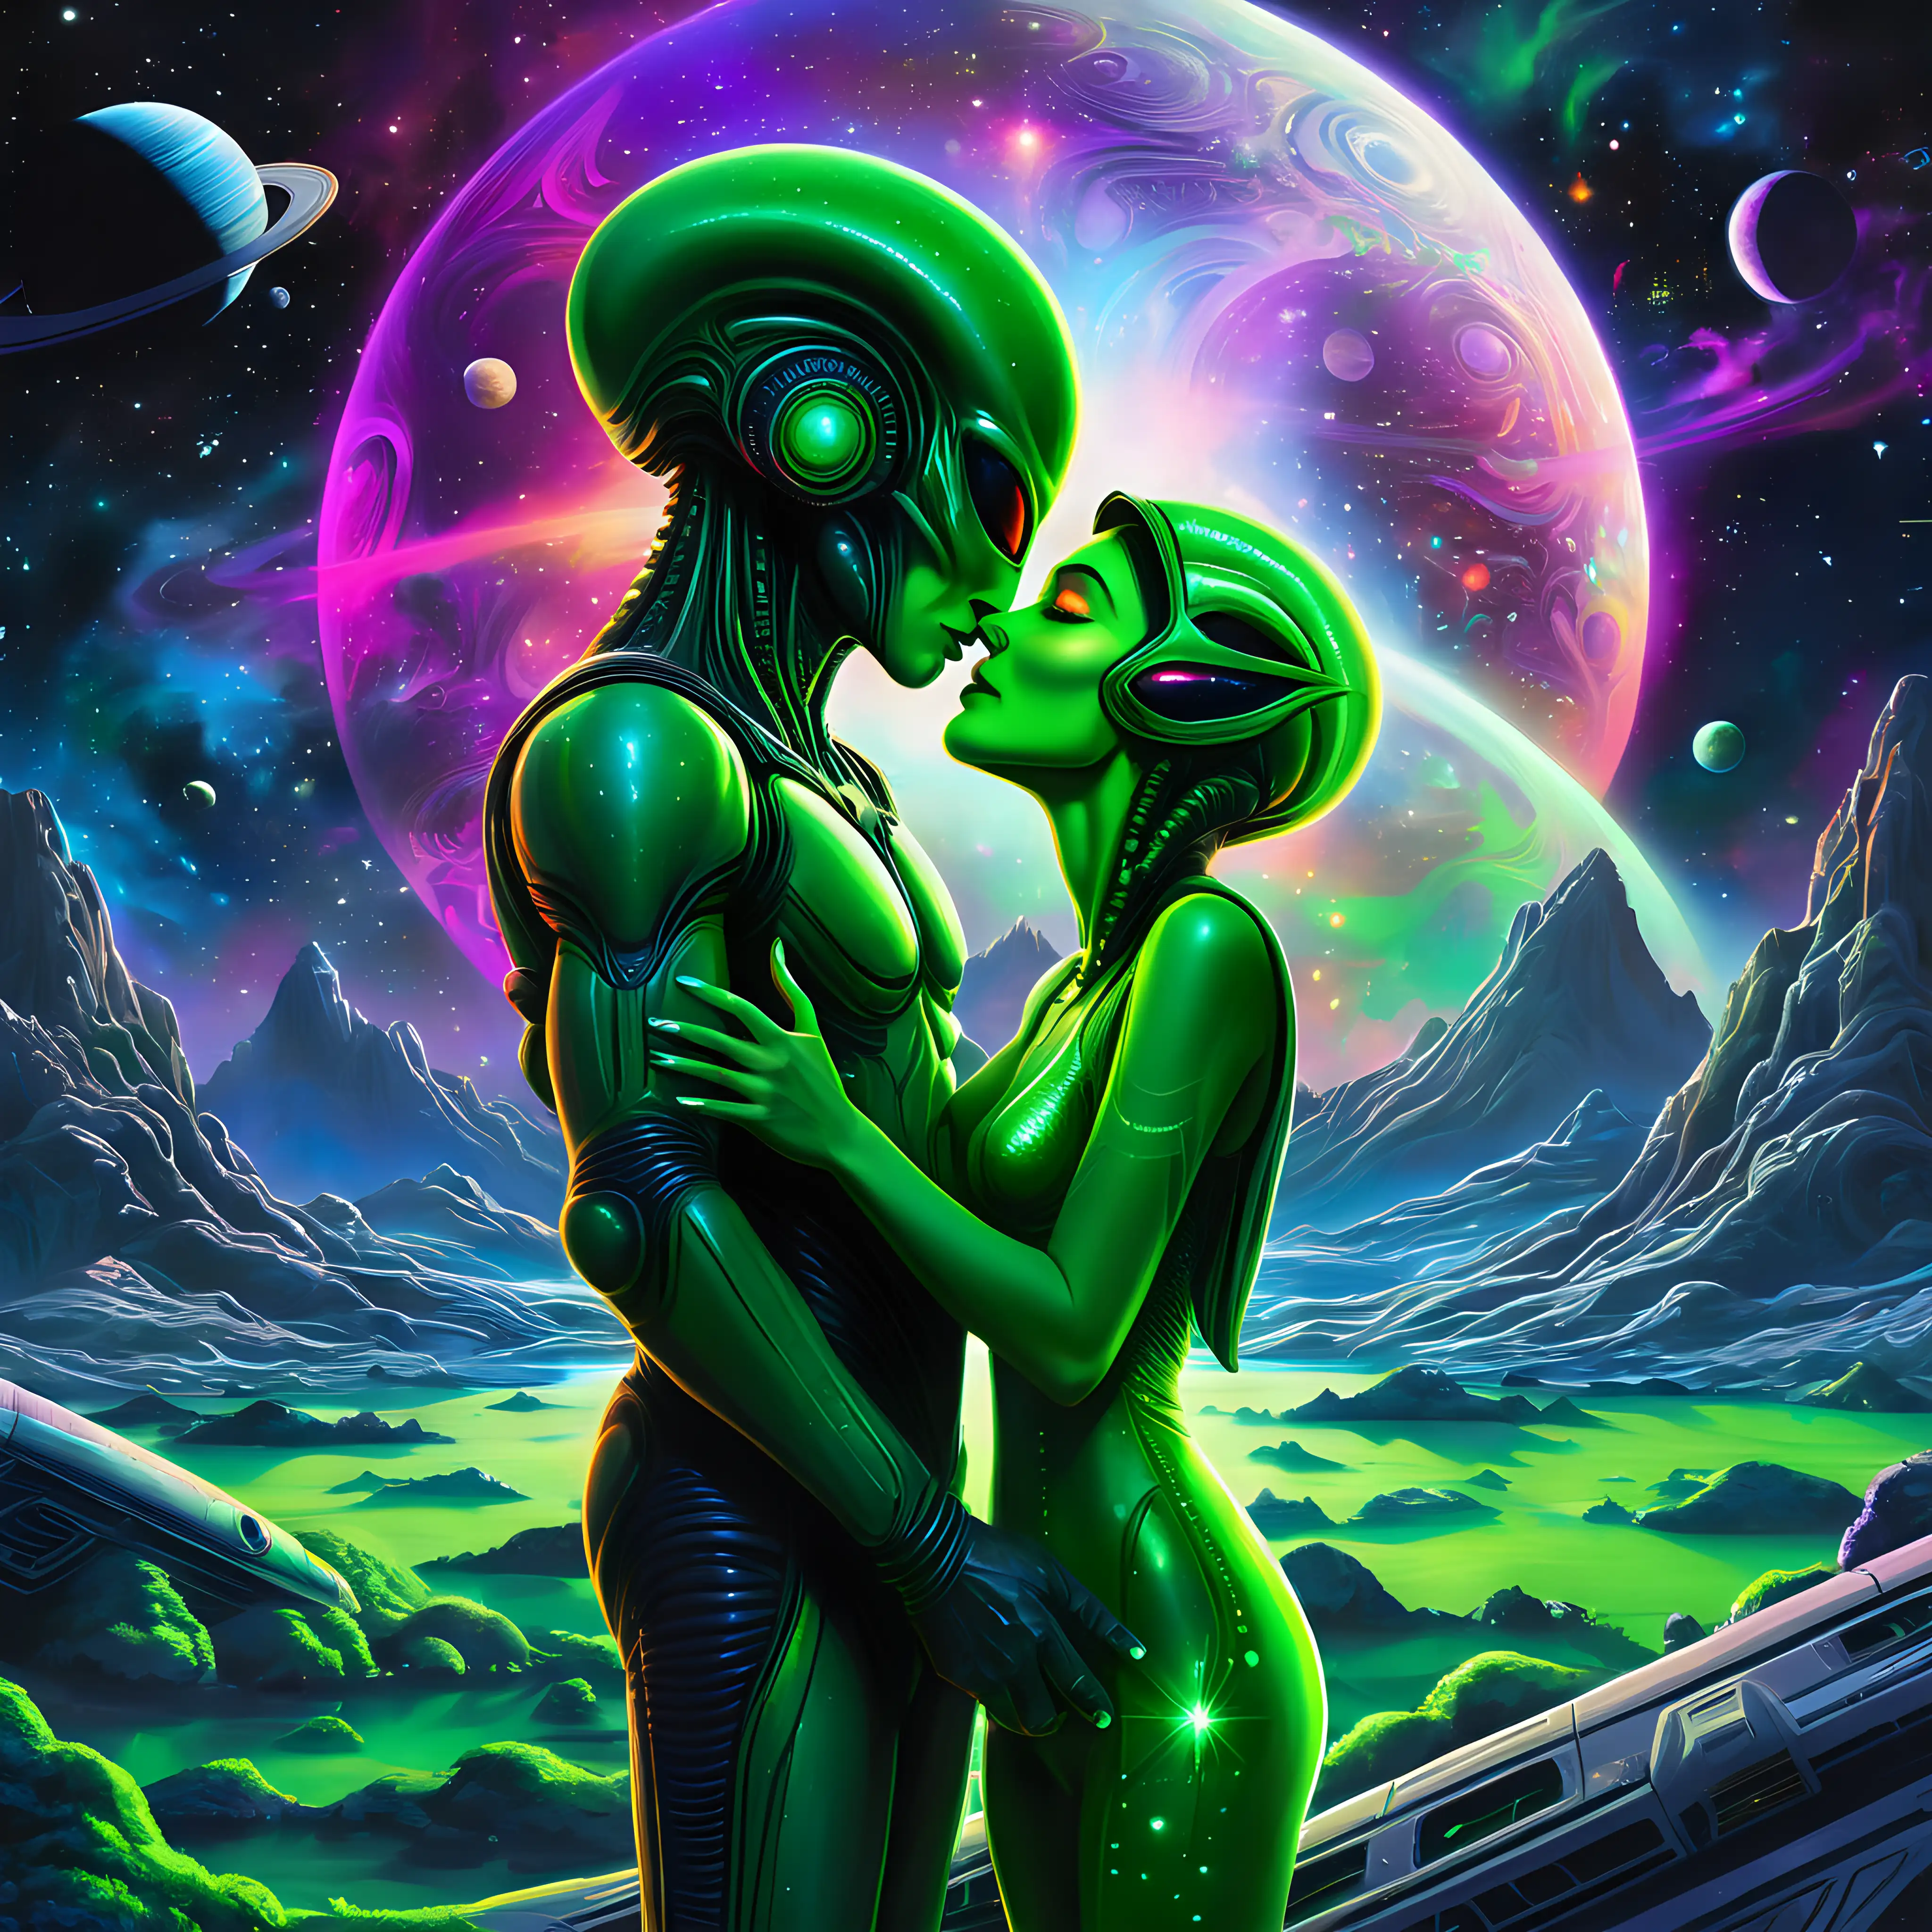 Extraterrestrial Love Cosmic Graffiti Art in Intergalactic Setting